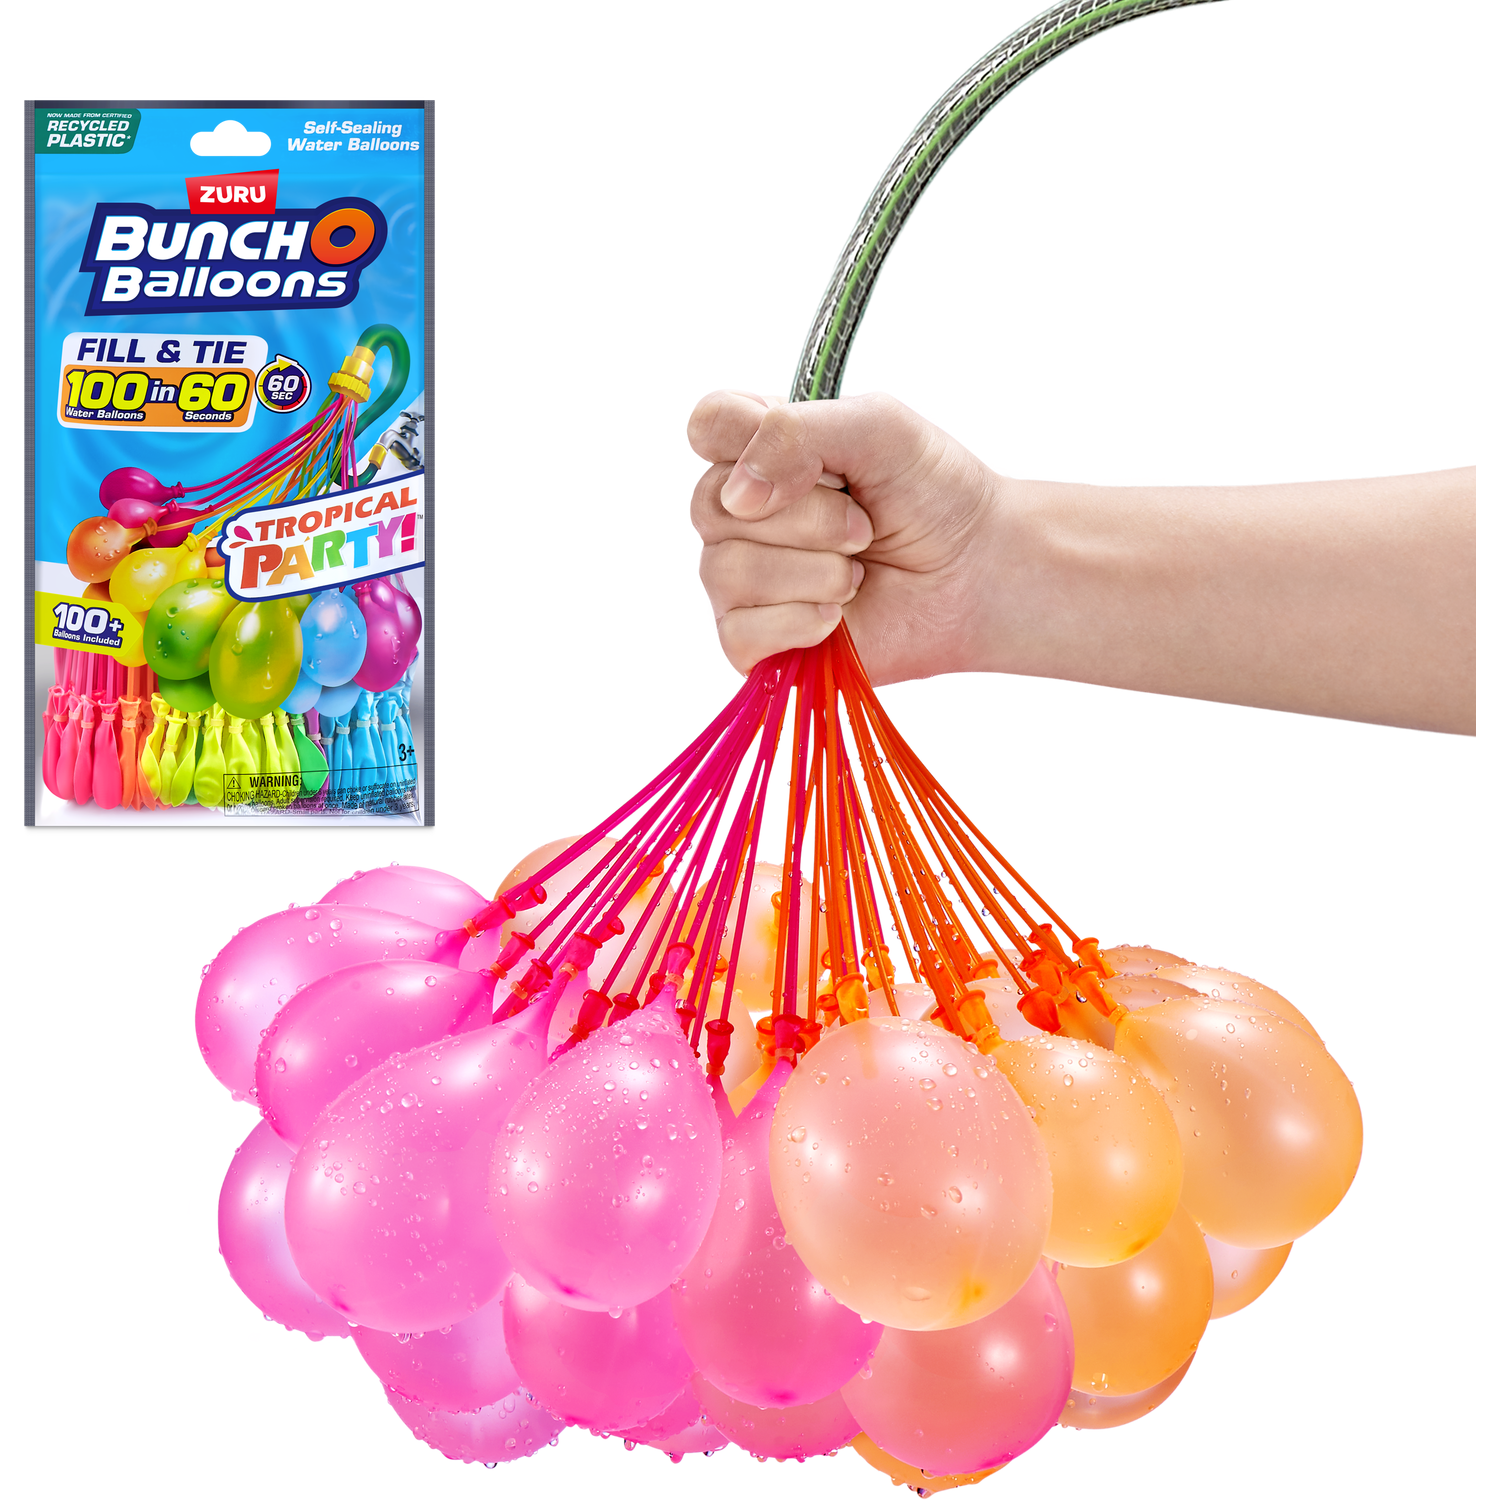 Tropical Party Bunch O Balloons Image 4